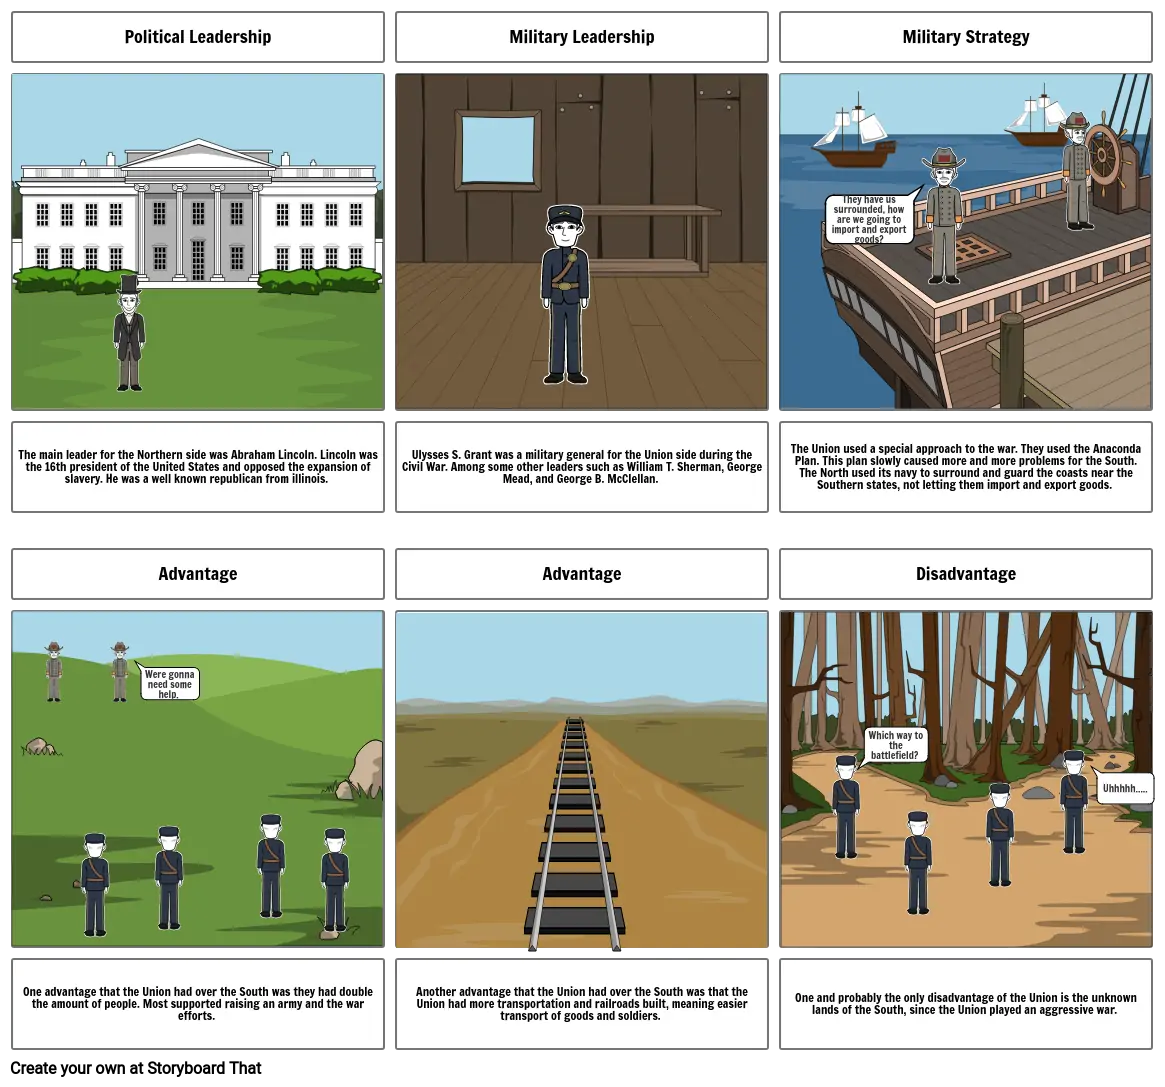 Civil War Storyboard